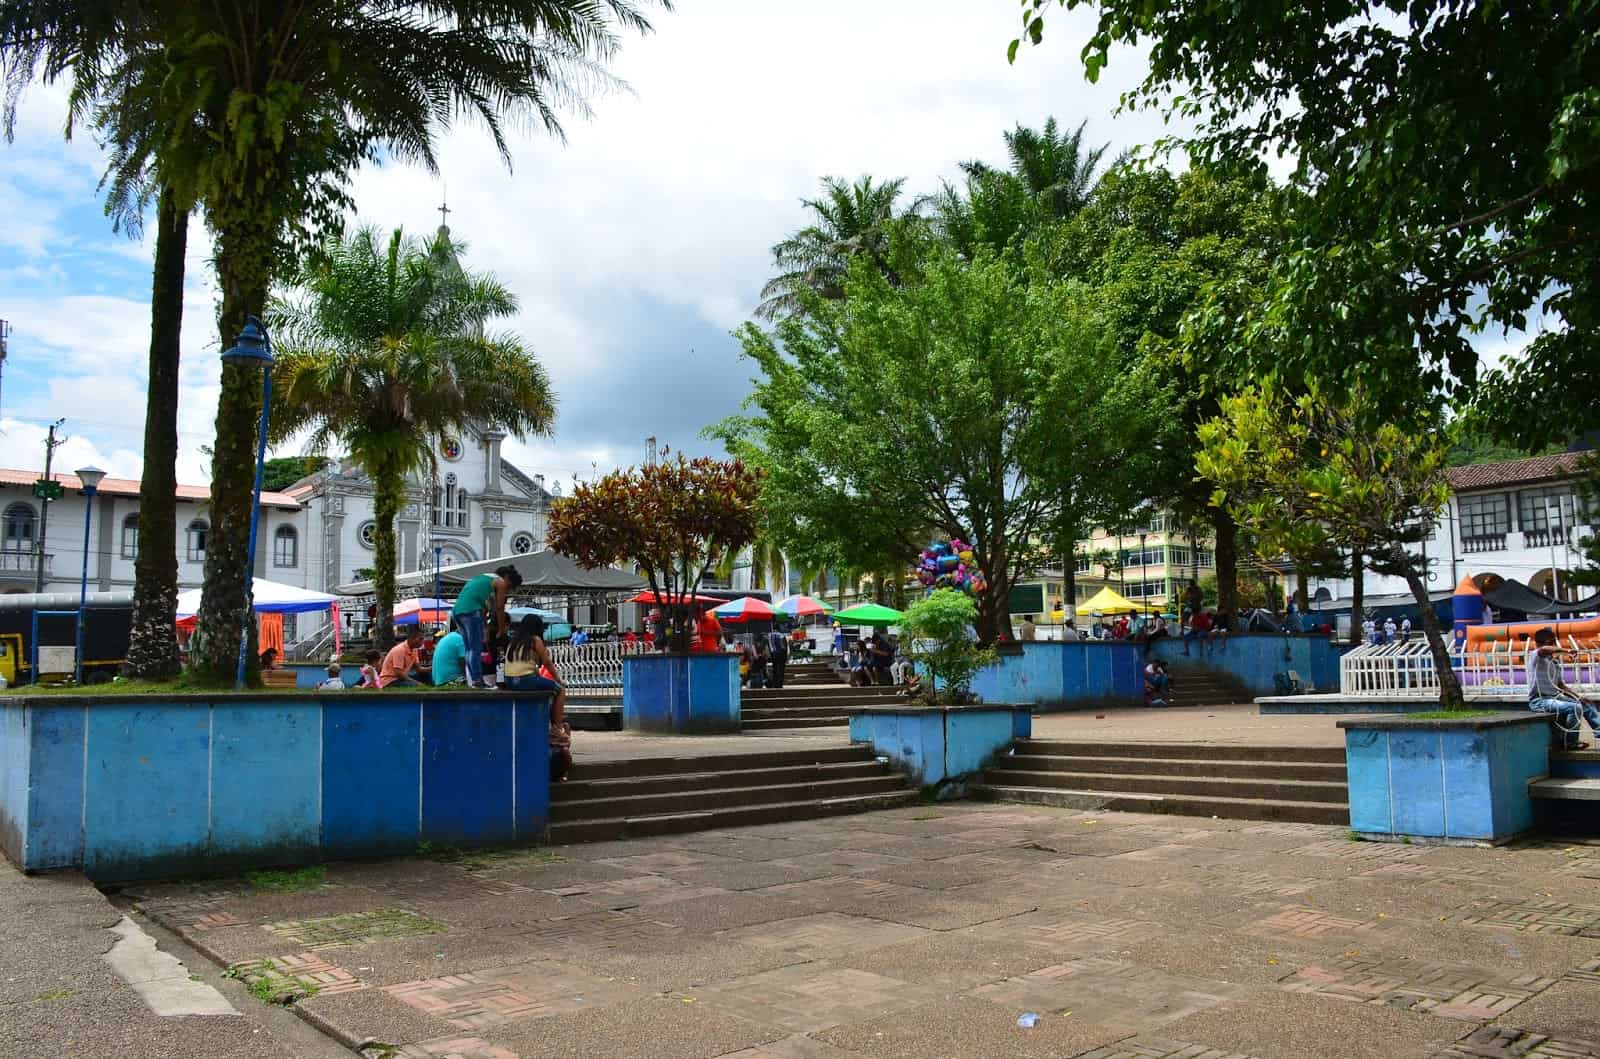 Plaza in Mocoa, Putumayo, Colombia